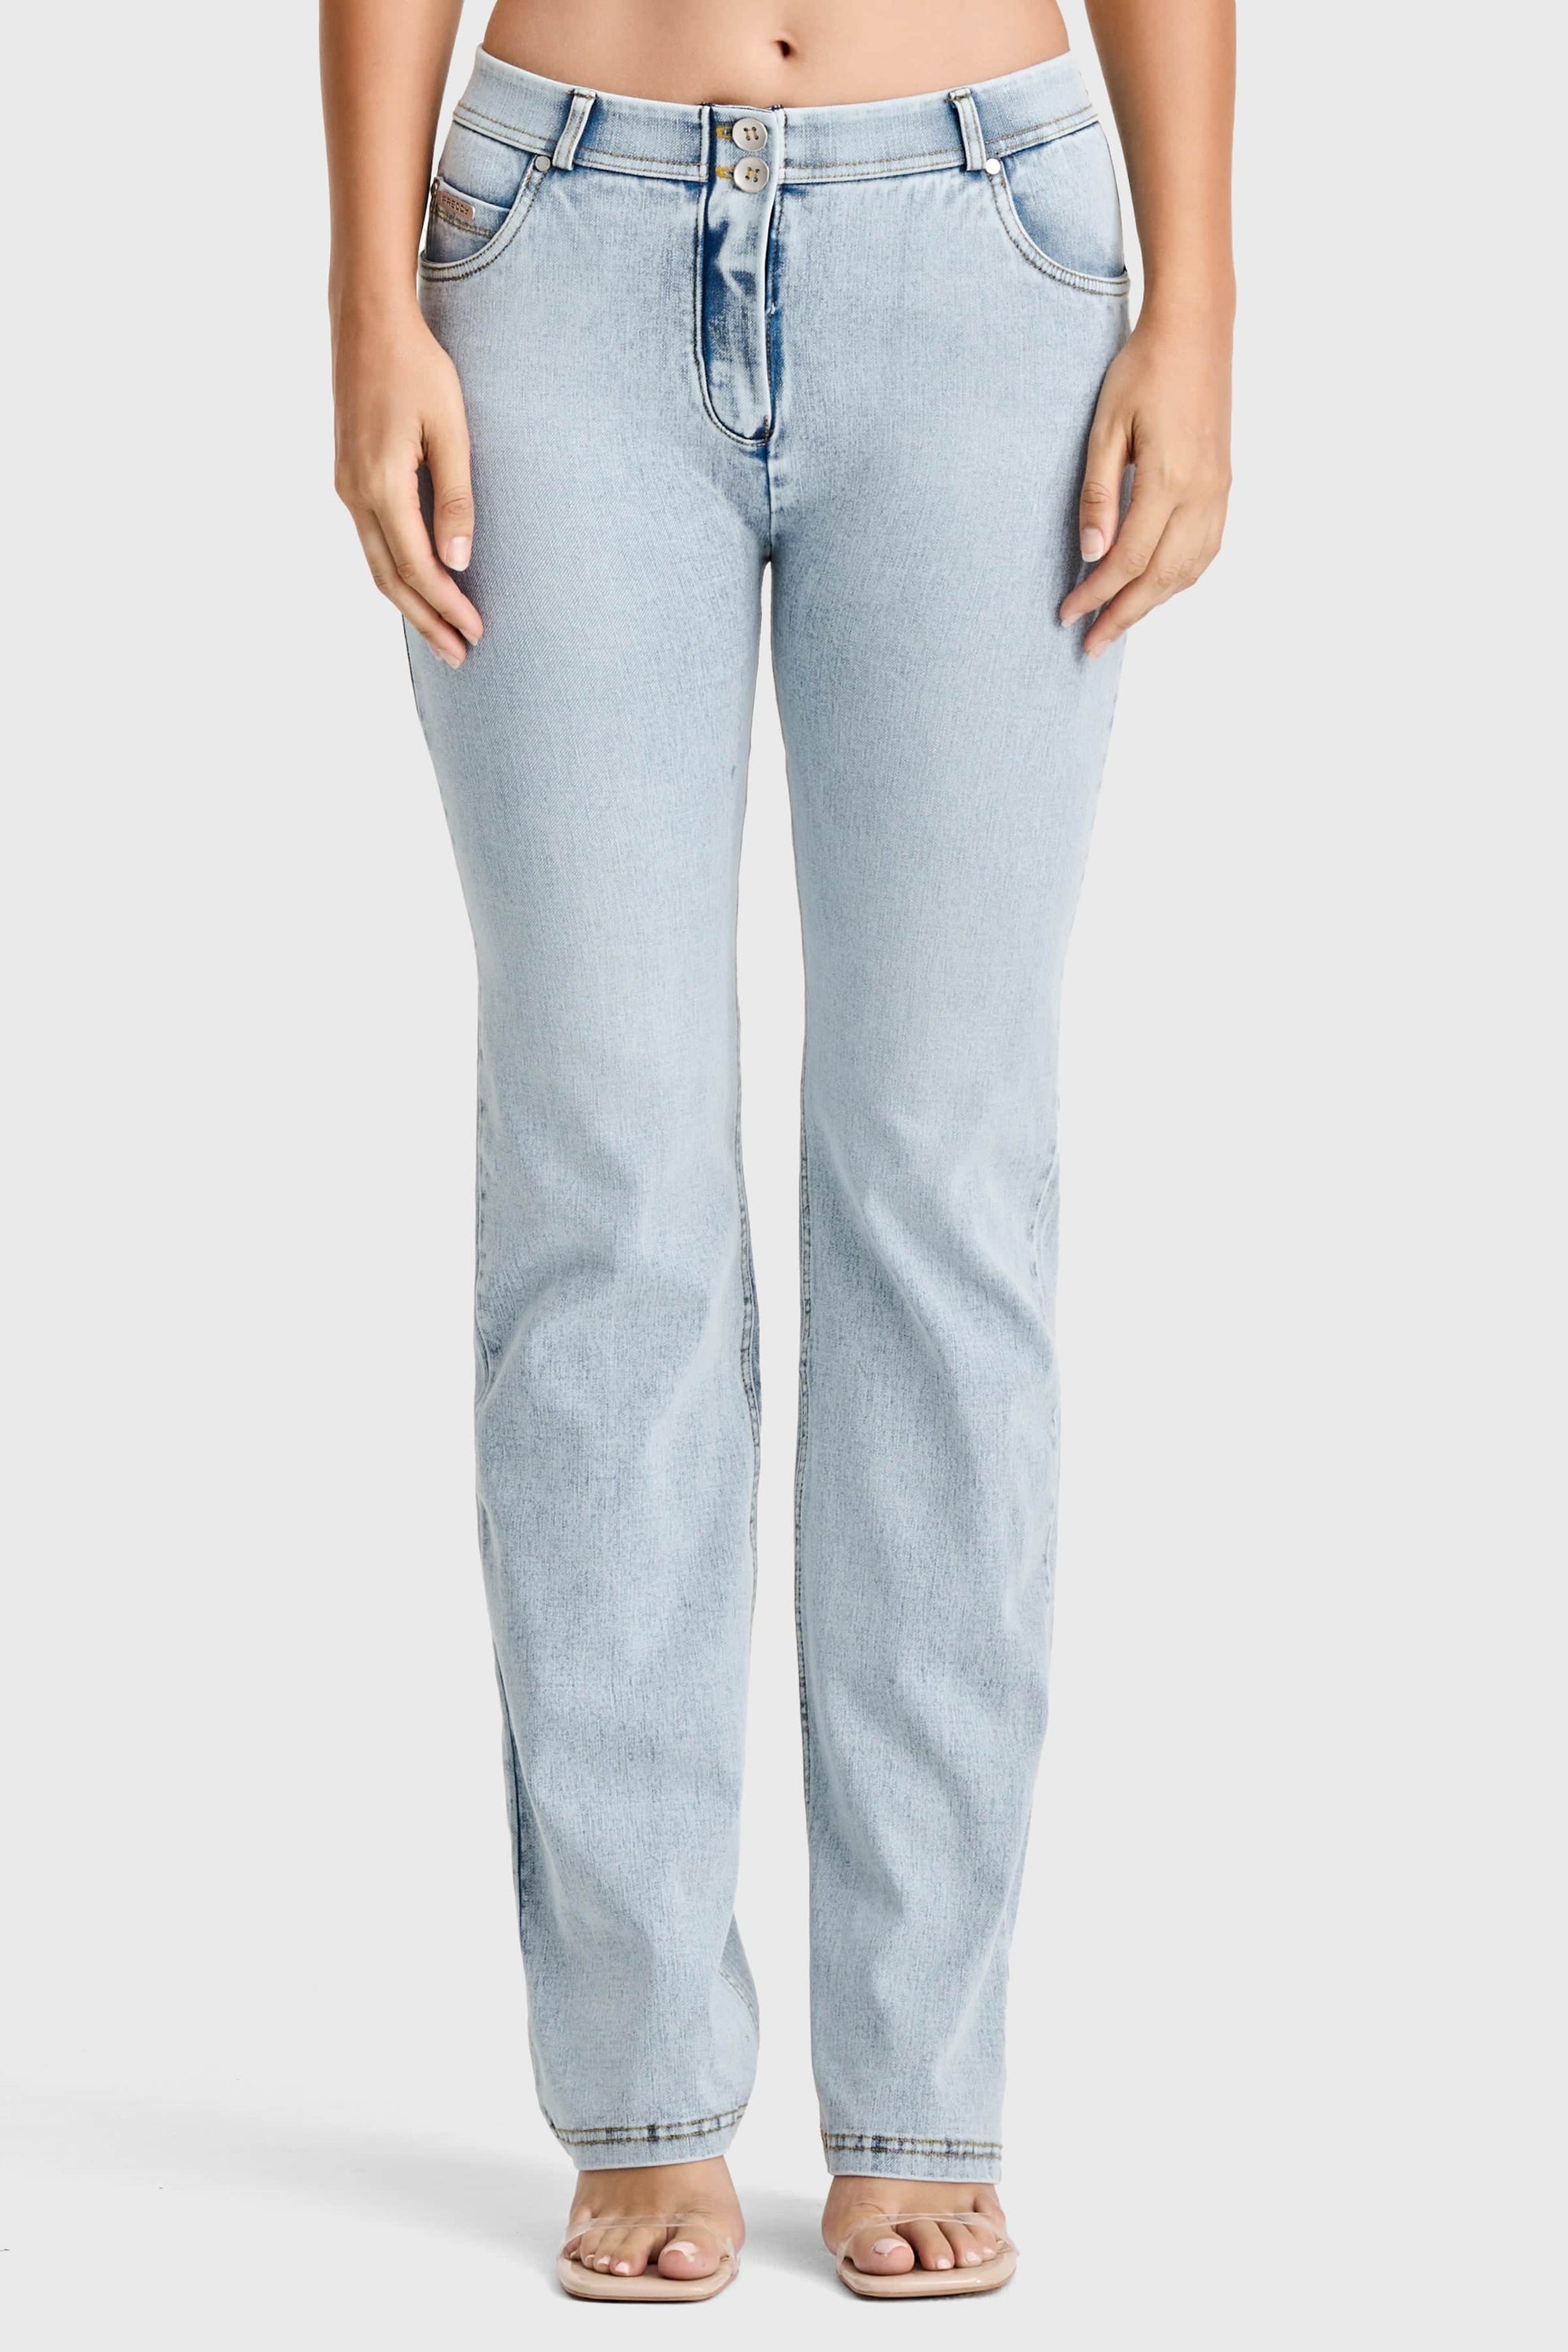 WR.UP® Snug Jeans - 2 Button High Waisted - Bootcut - Light Blue + Yellow Stitching 3